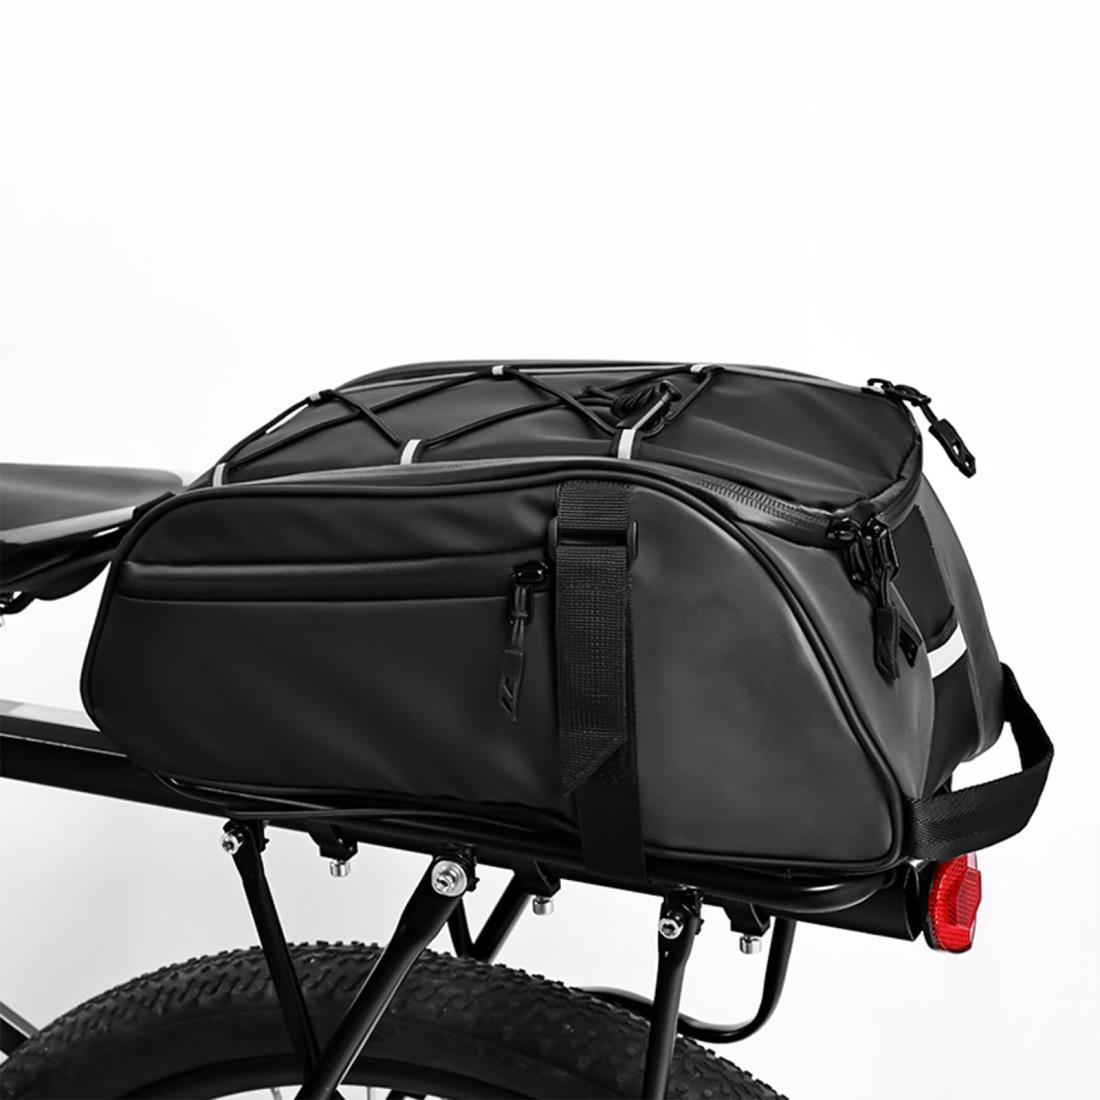 OIENNI 自転車バッグ リアバッグ 防水 8L大容量 バイクトランクバッグ ラックリアバッグ 取り付け簡単 ..